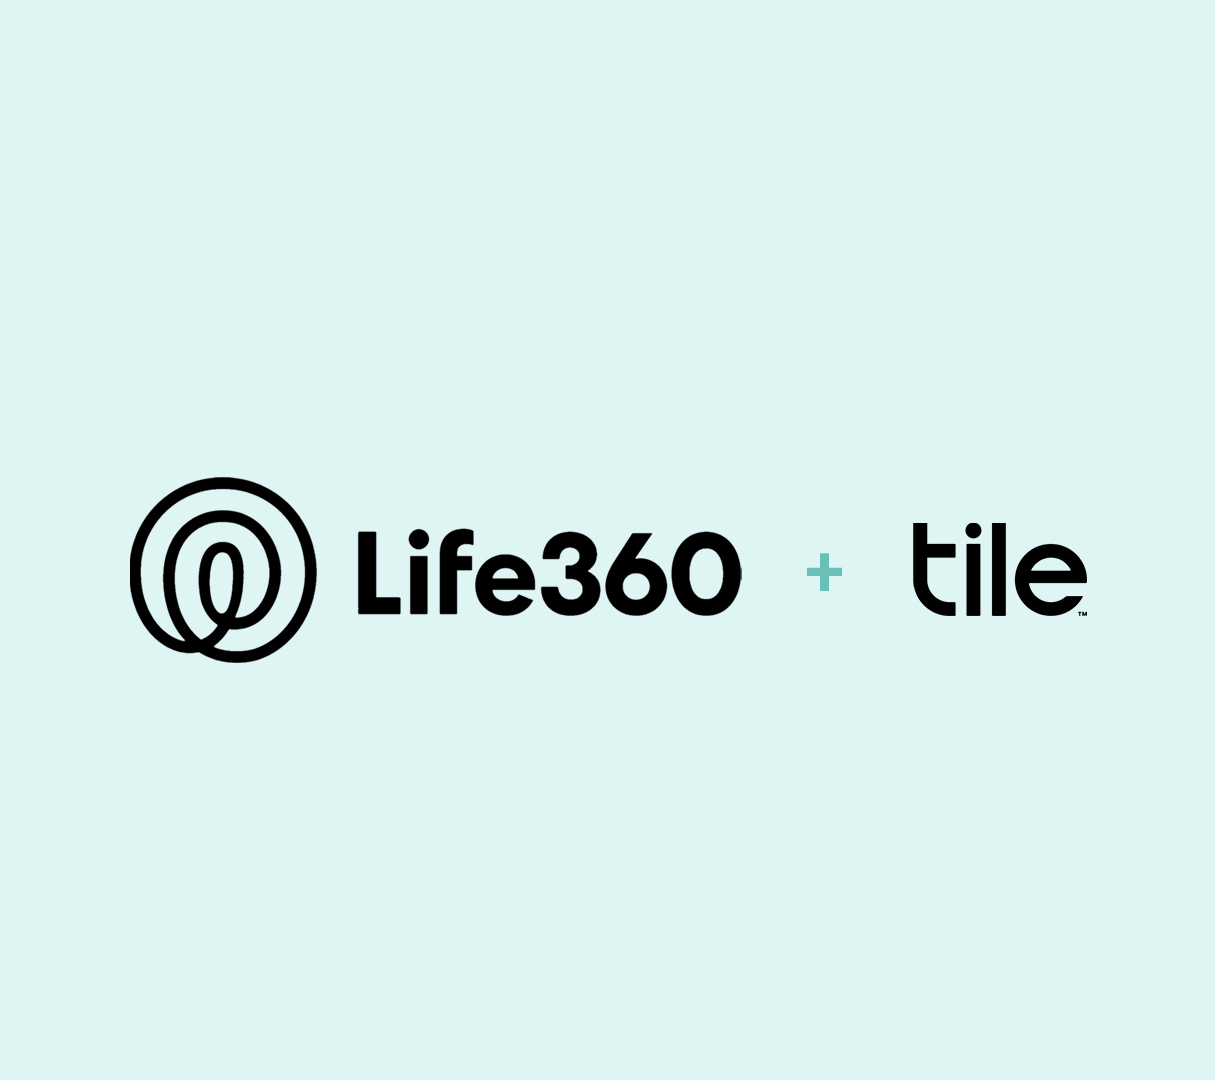 Life360 and Tile brand logos together